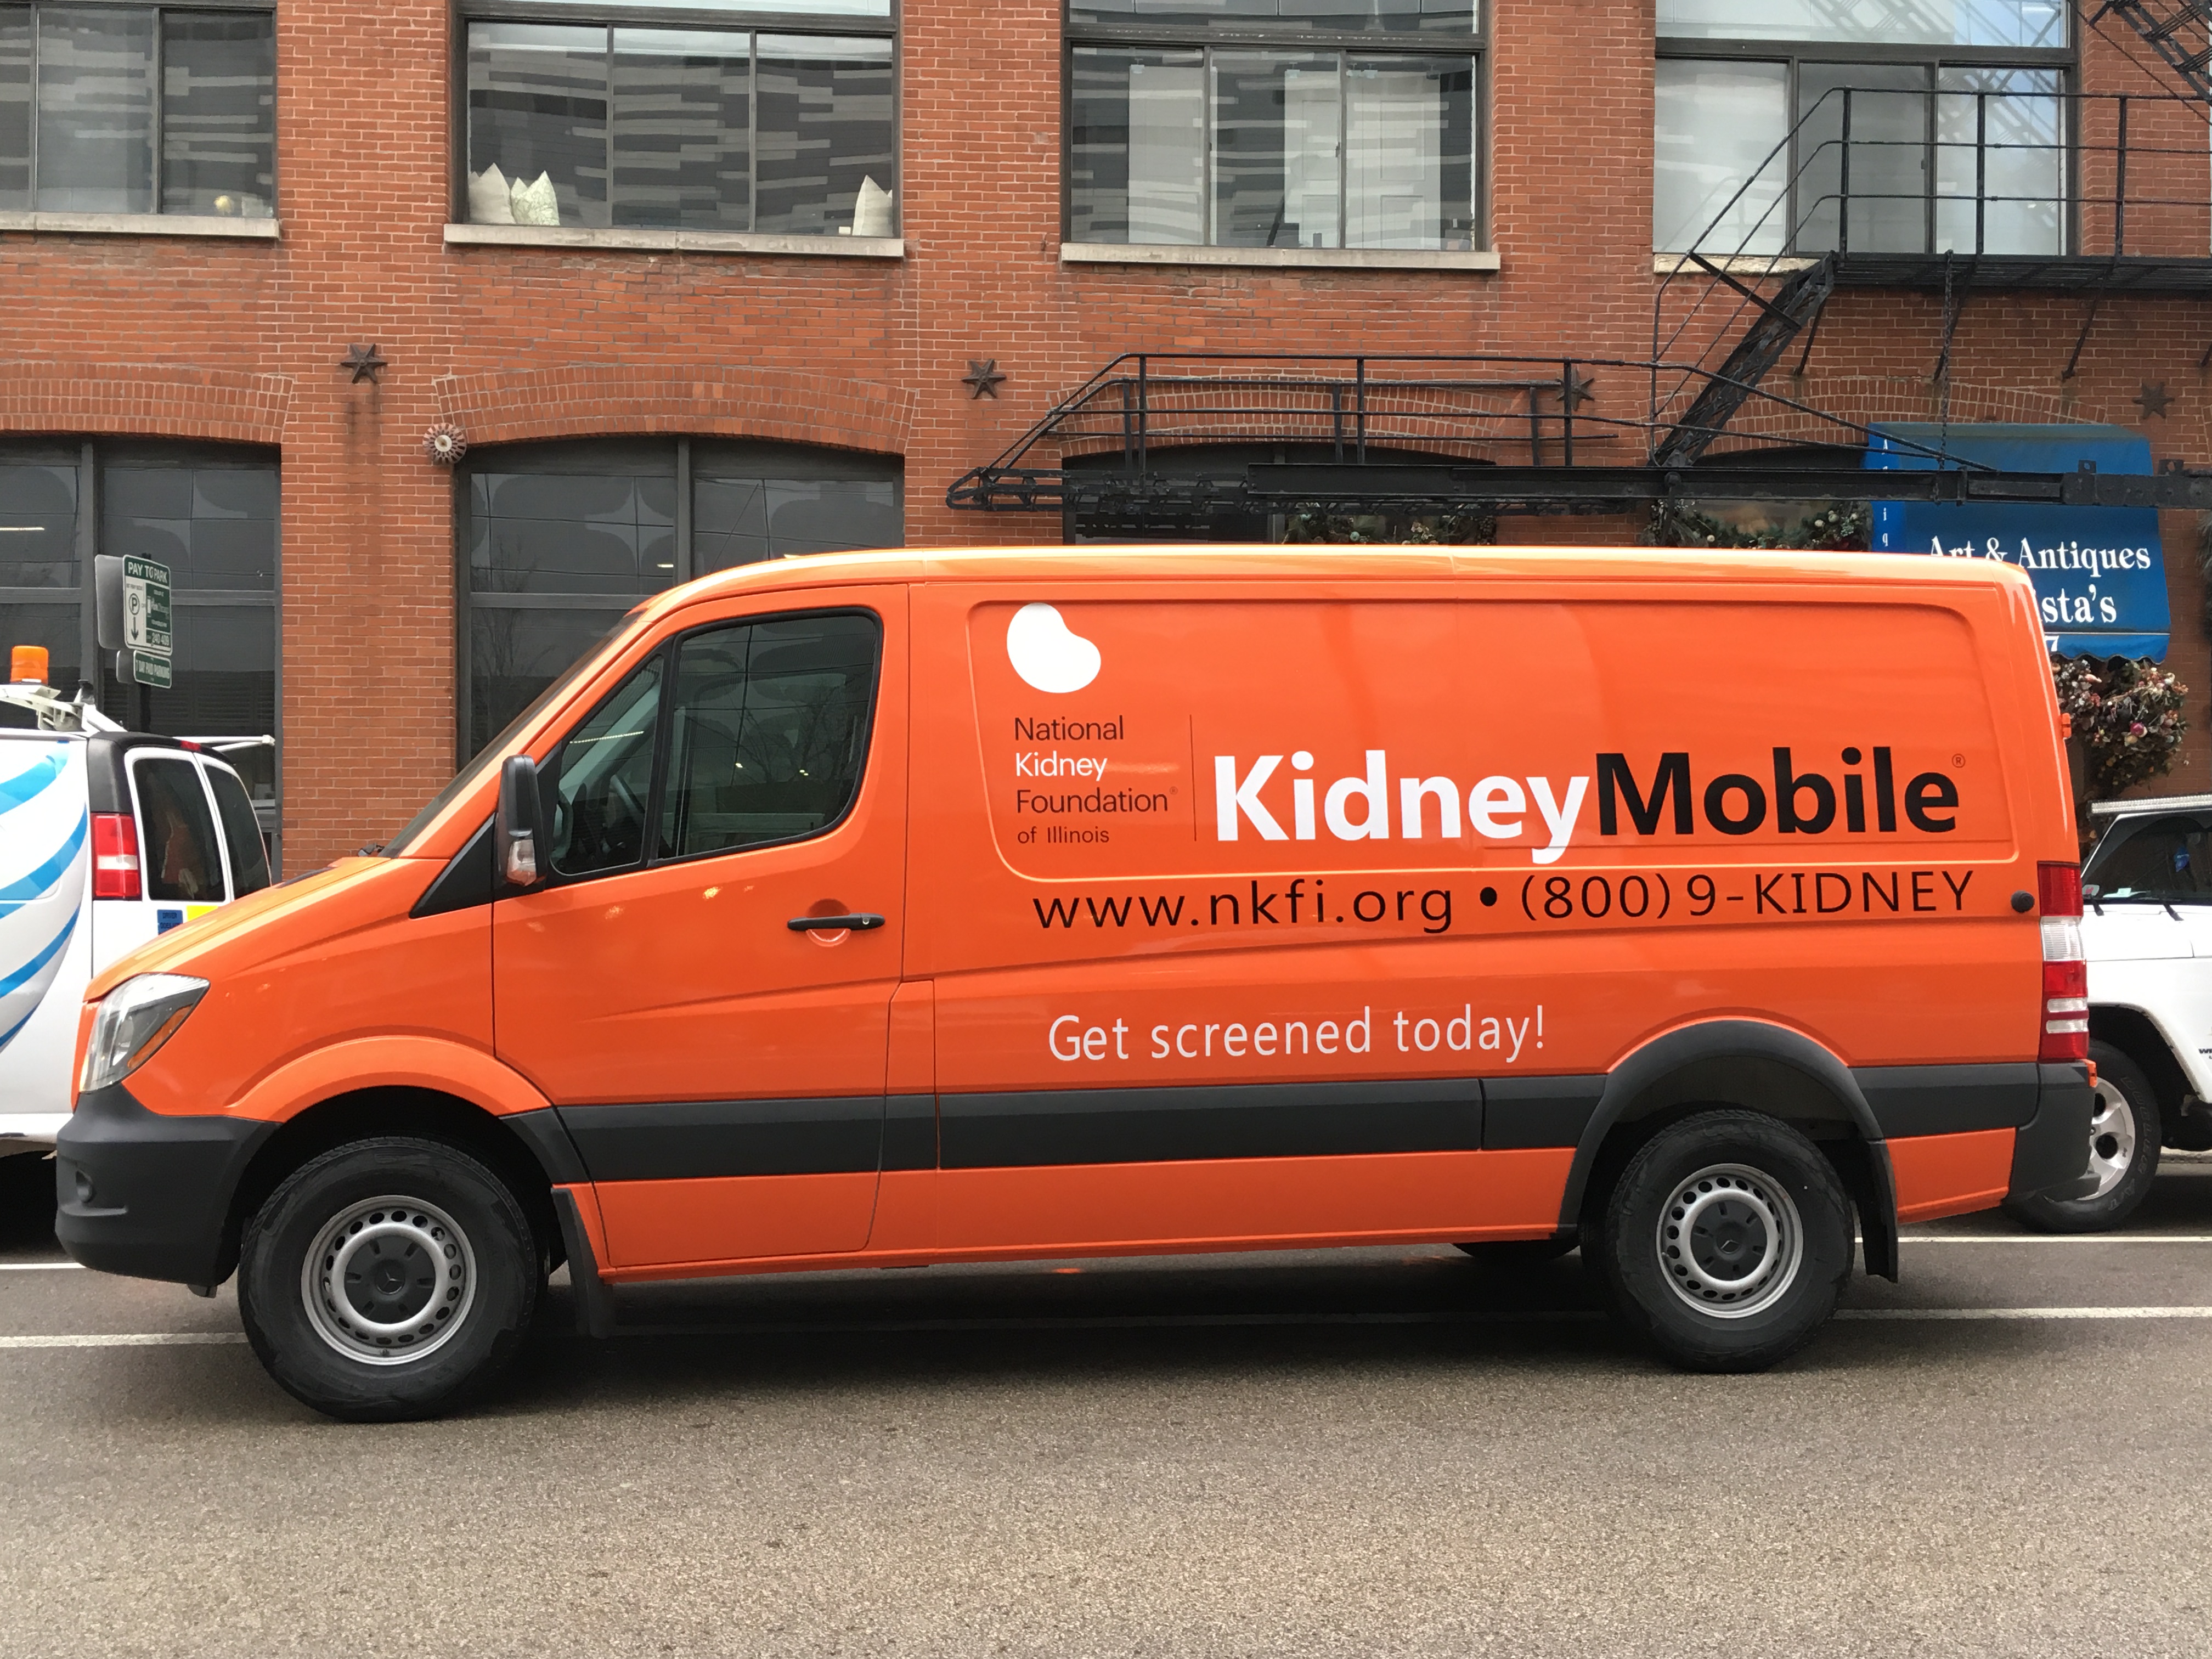 Photo of the KidneyMobile